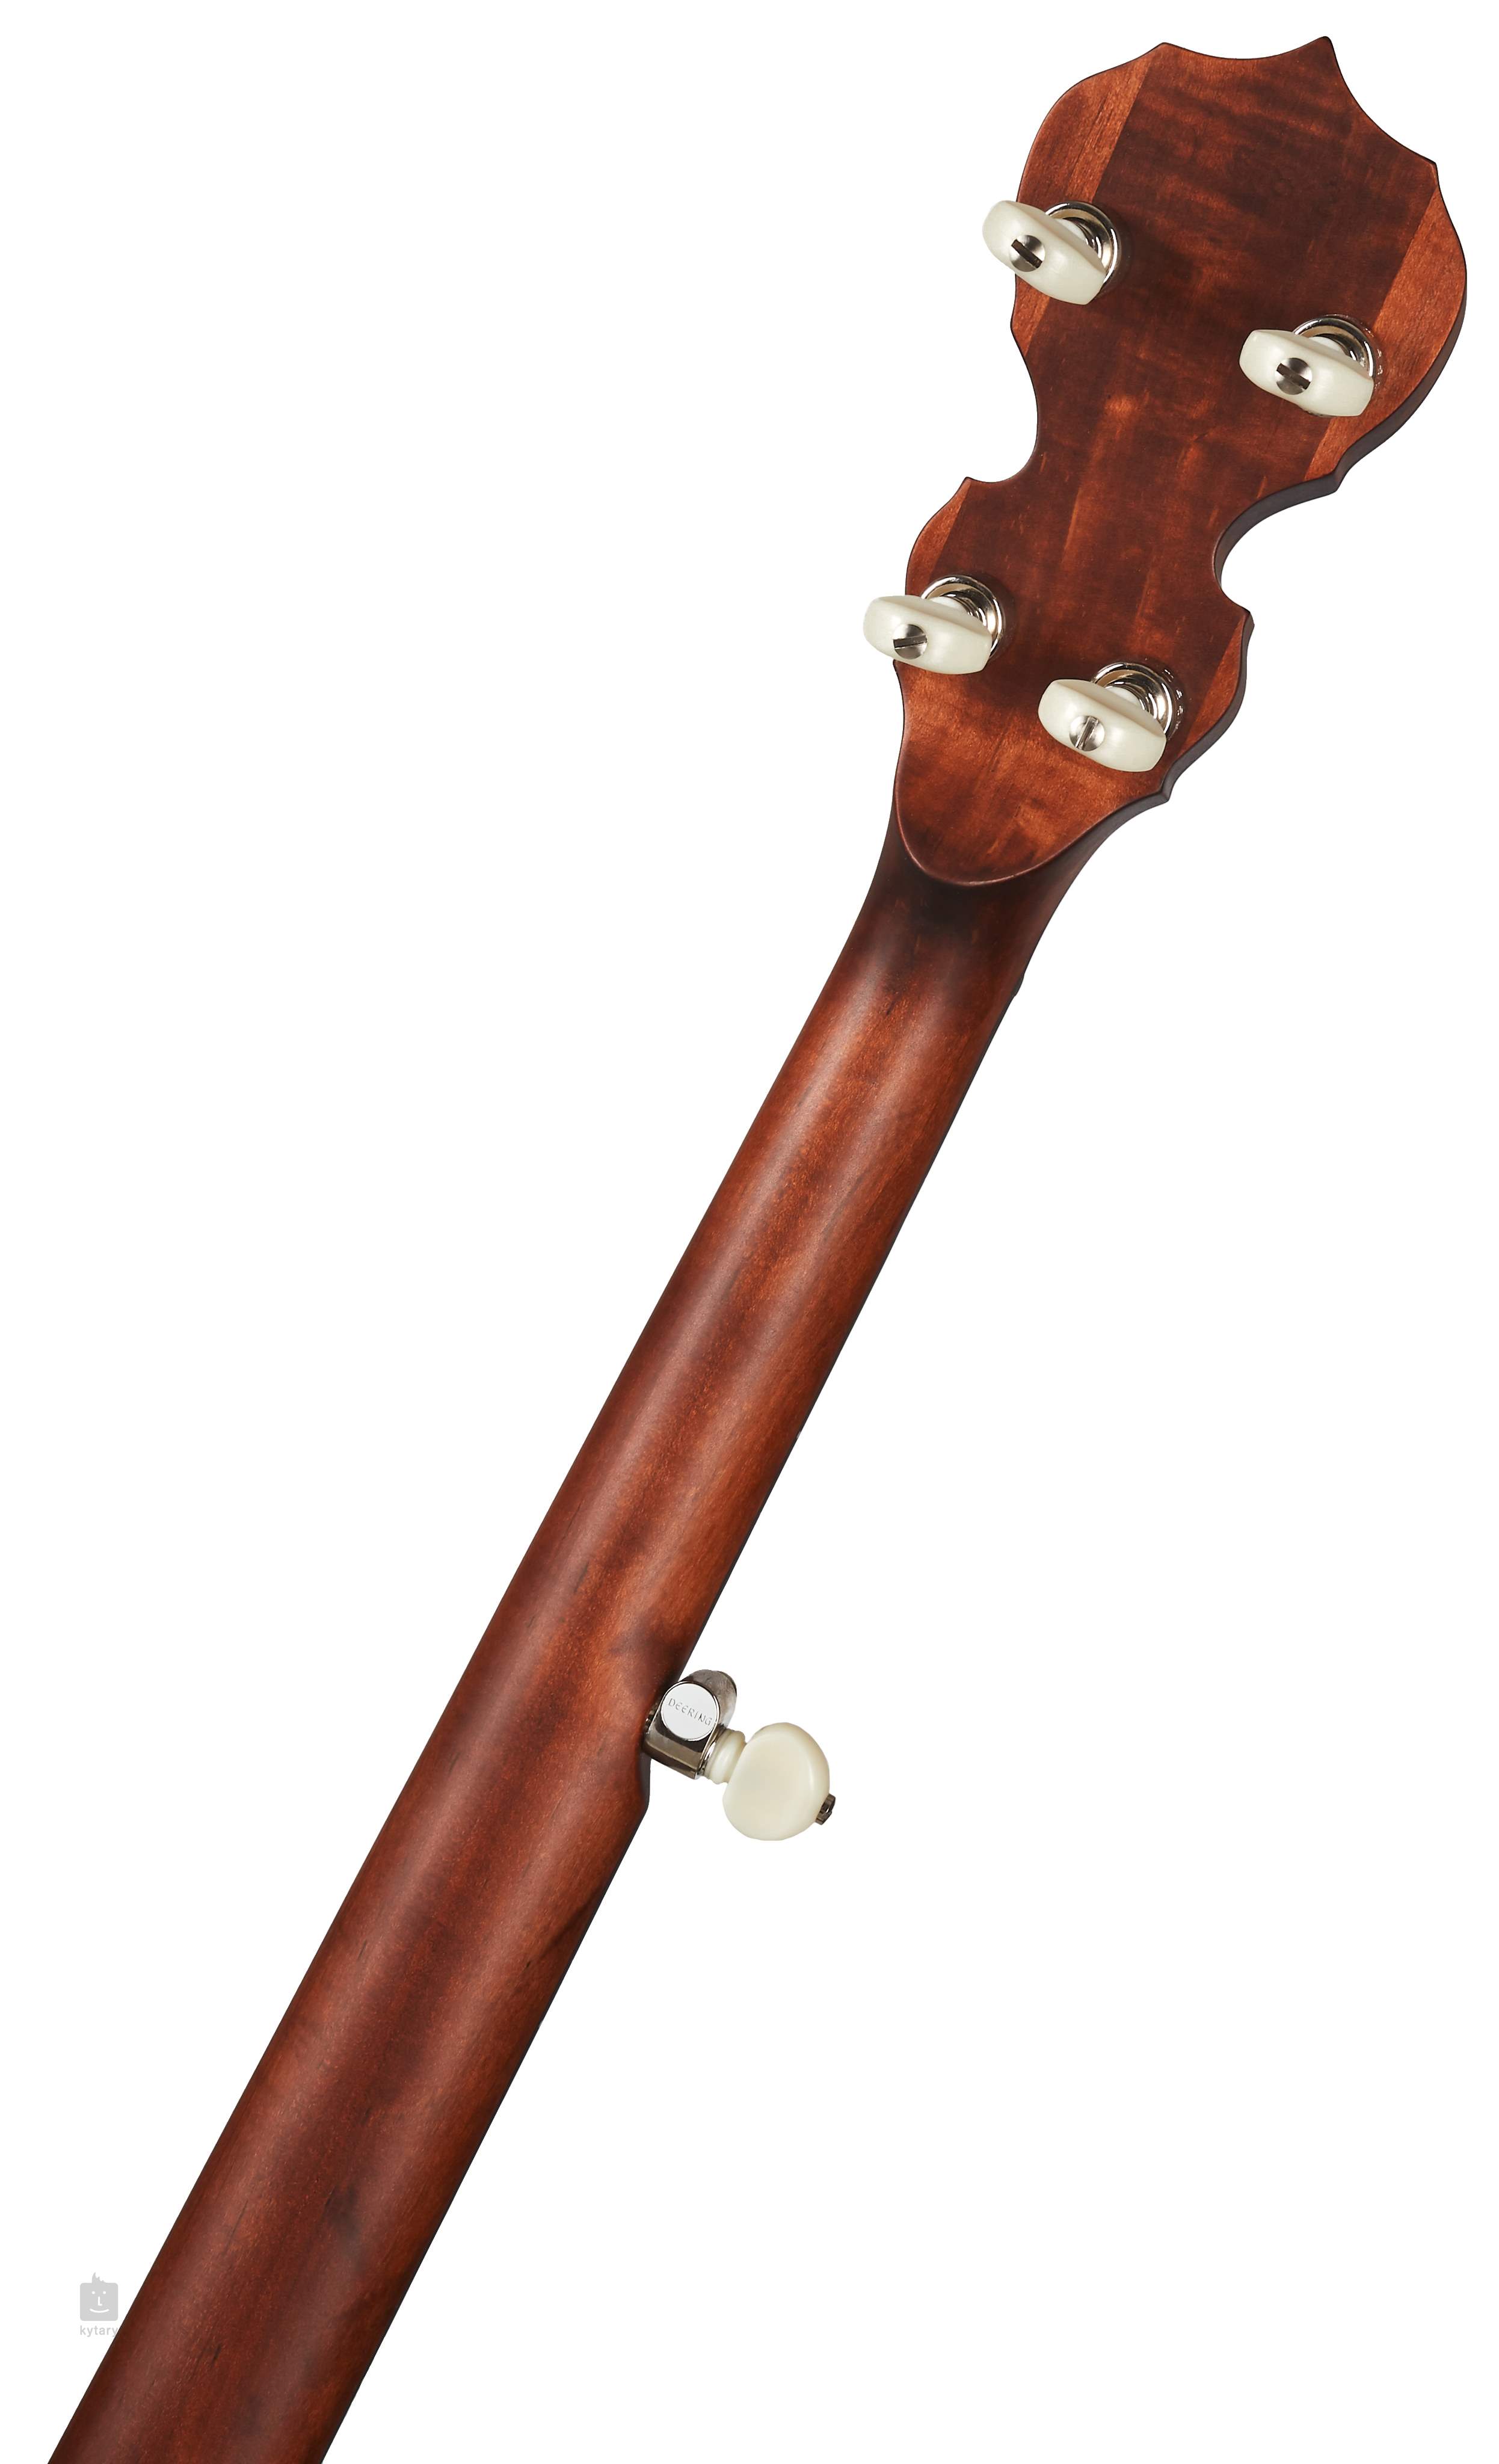 DEERING Sierra 5 String Maple Banjo Banjo